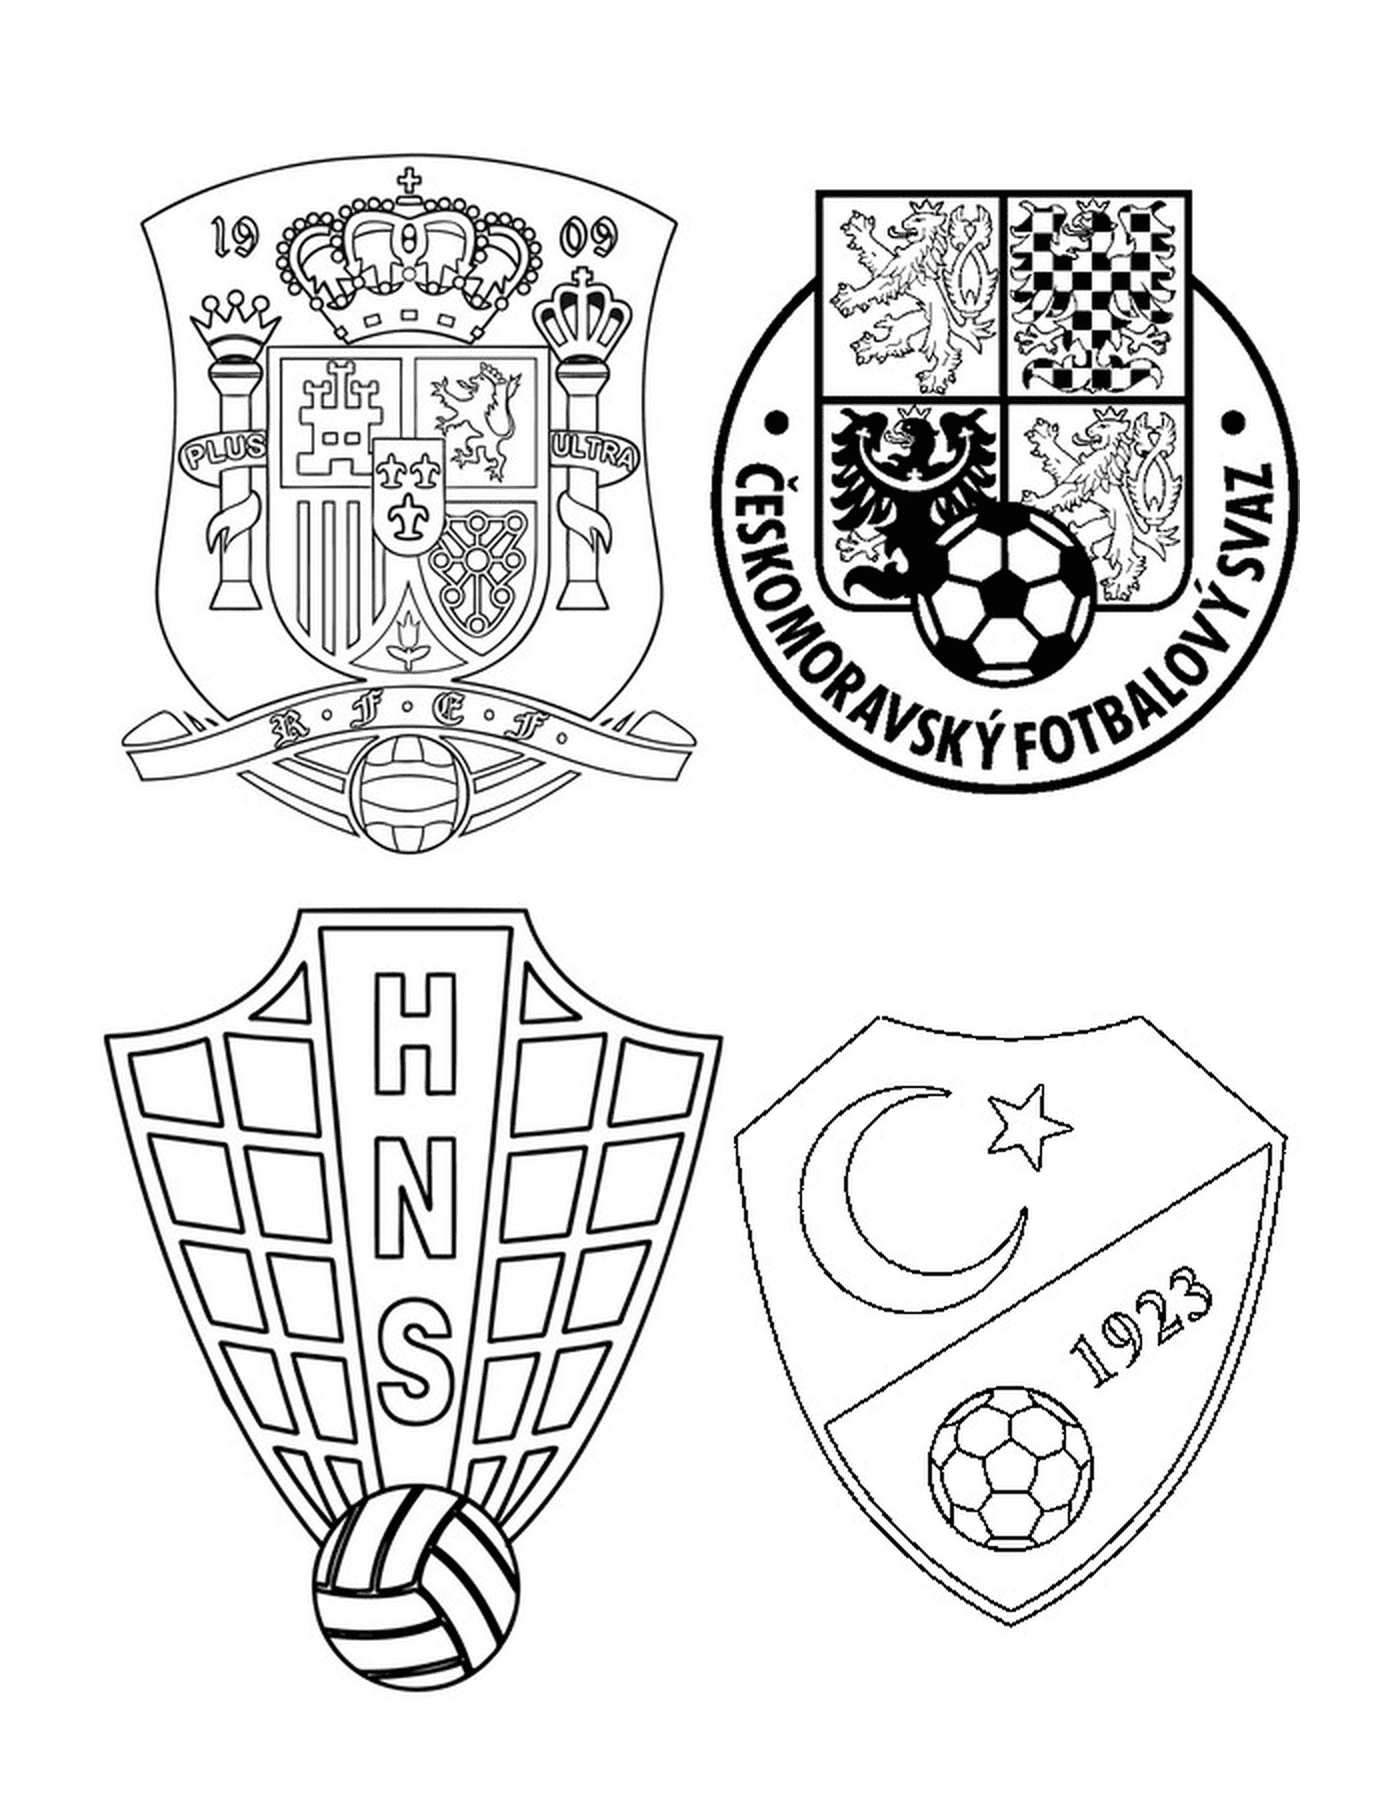  Four different football team logos 